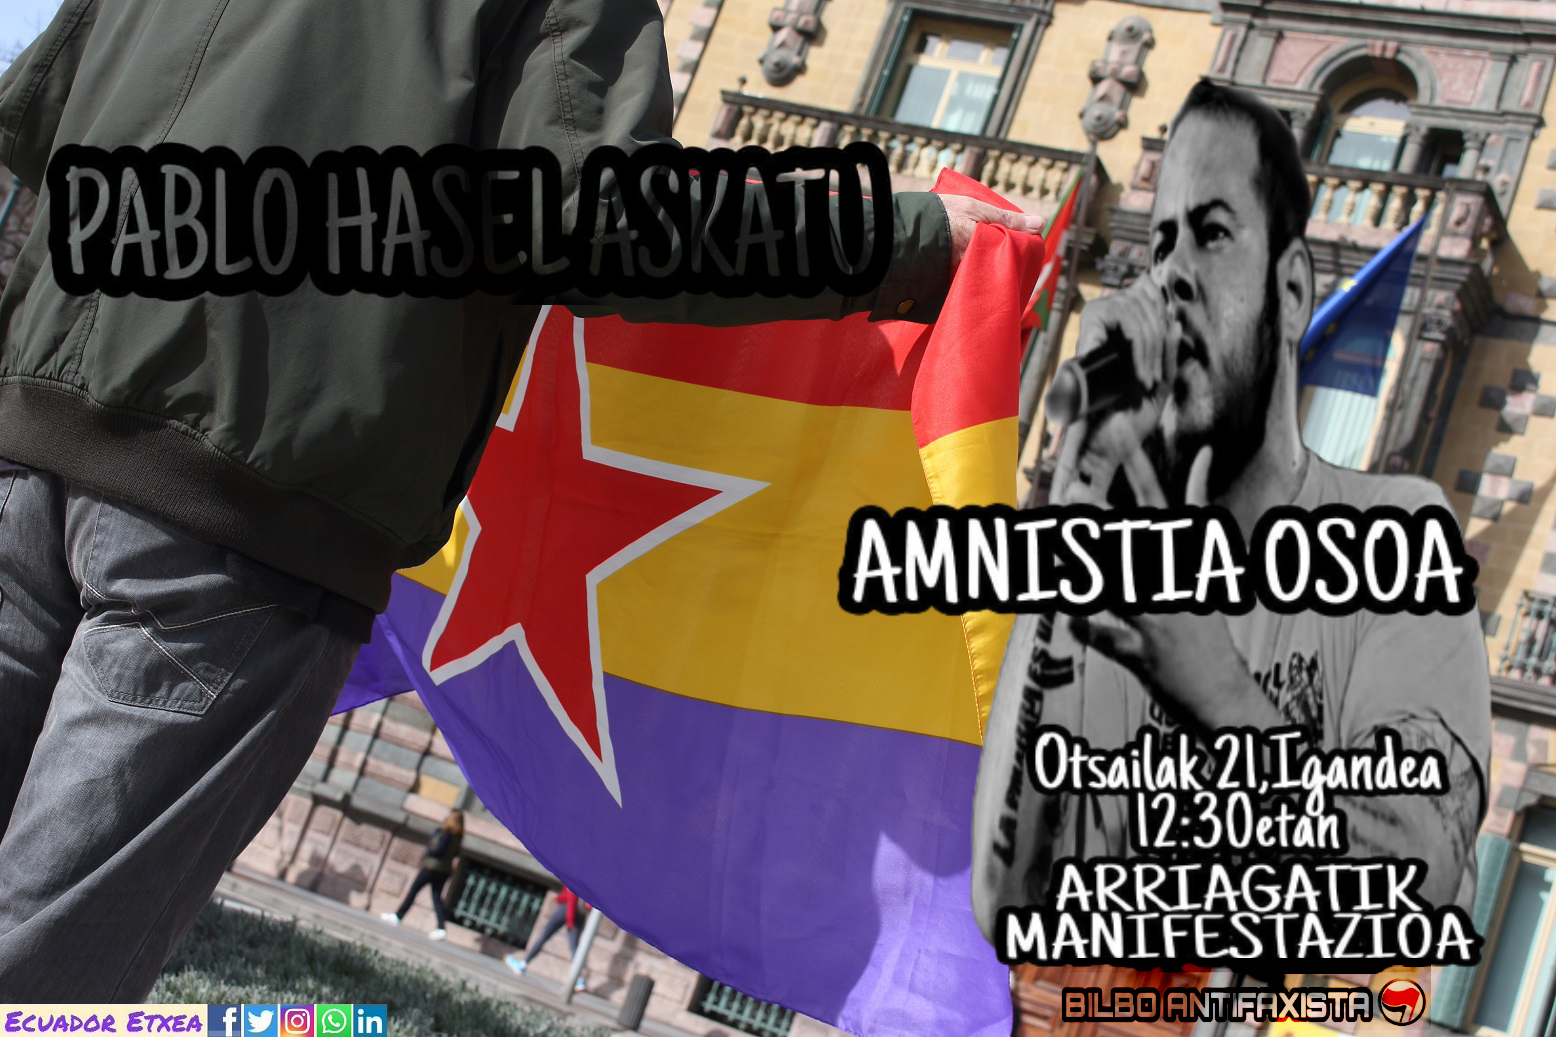 pablo-hasel-cárcel-prisión-rapero-monarquía-borbón-rey-españa-antifascismo-vasco-bilbao-antifaxista-amnistia